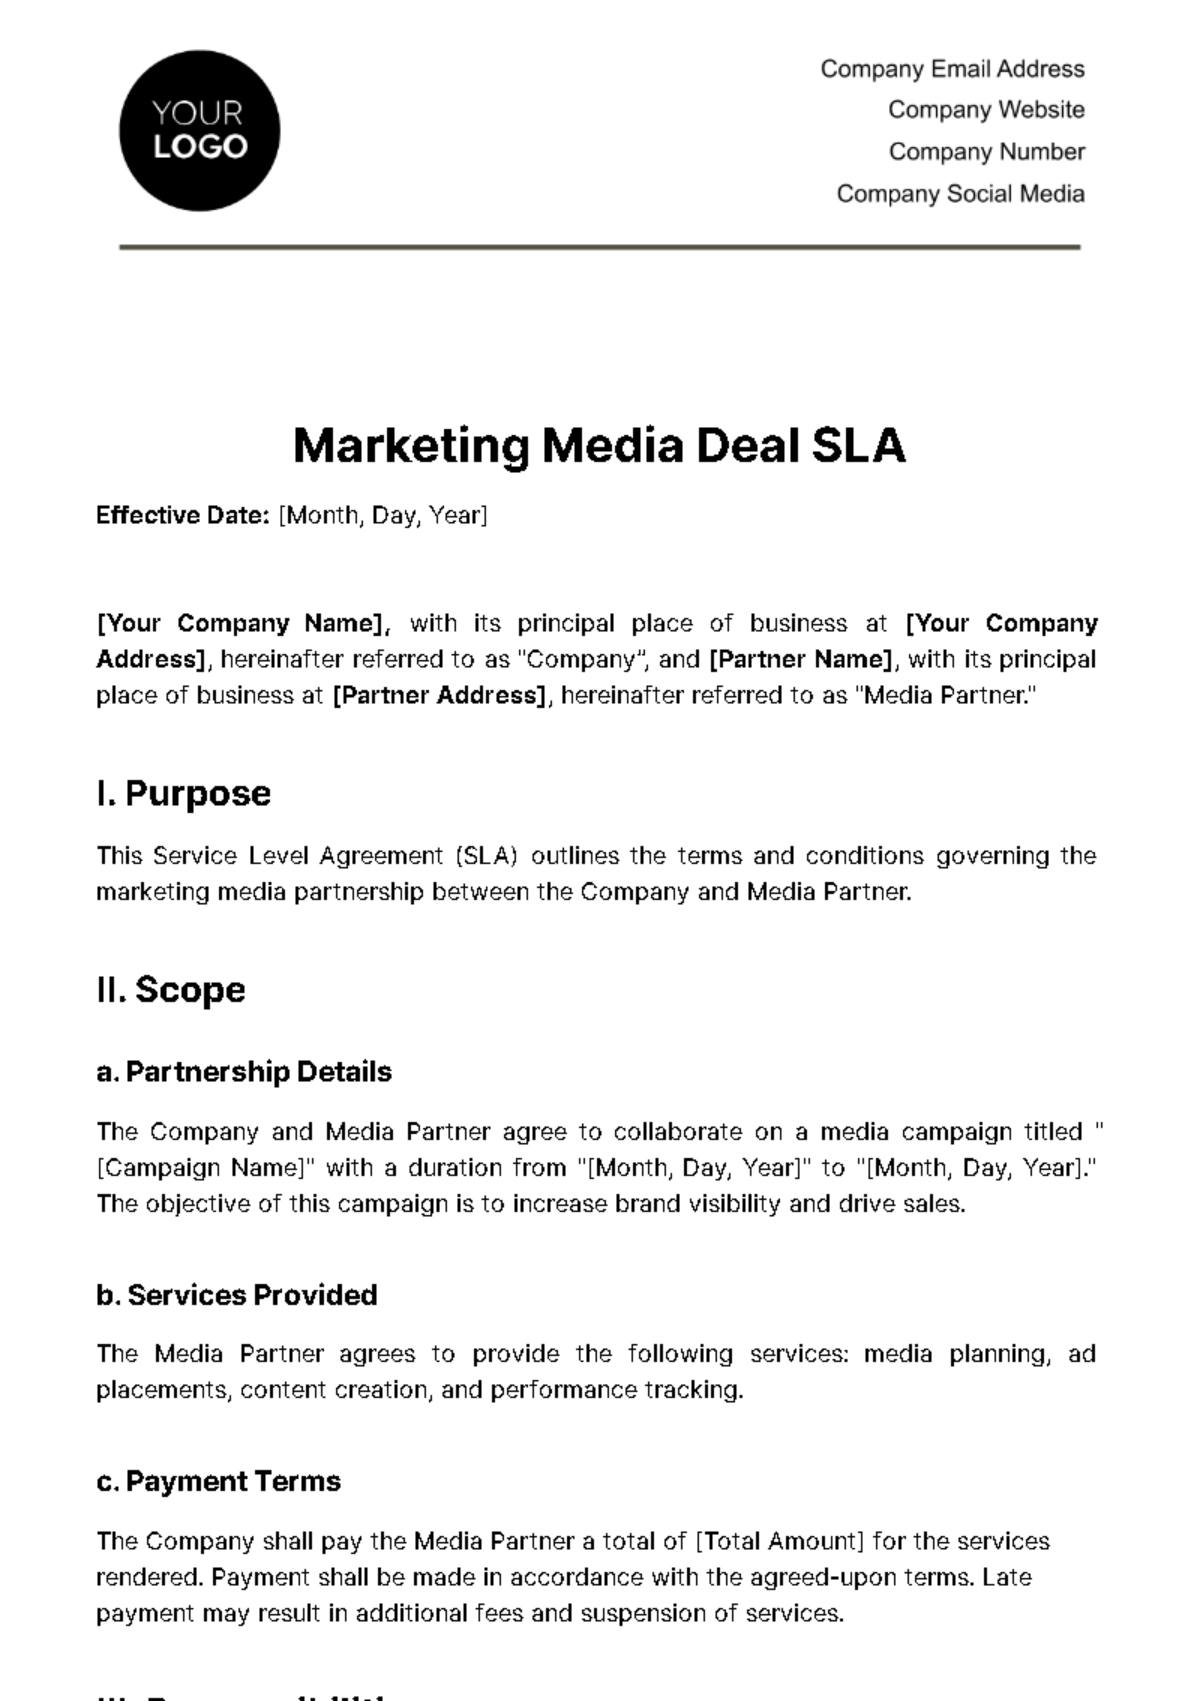 Marketing Media Deal SLA Template